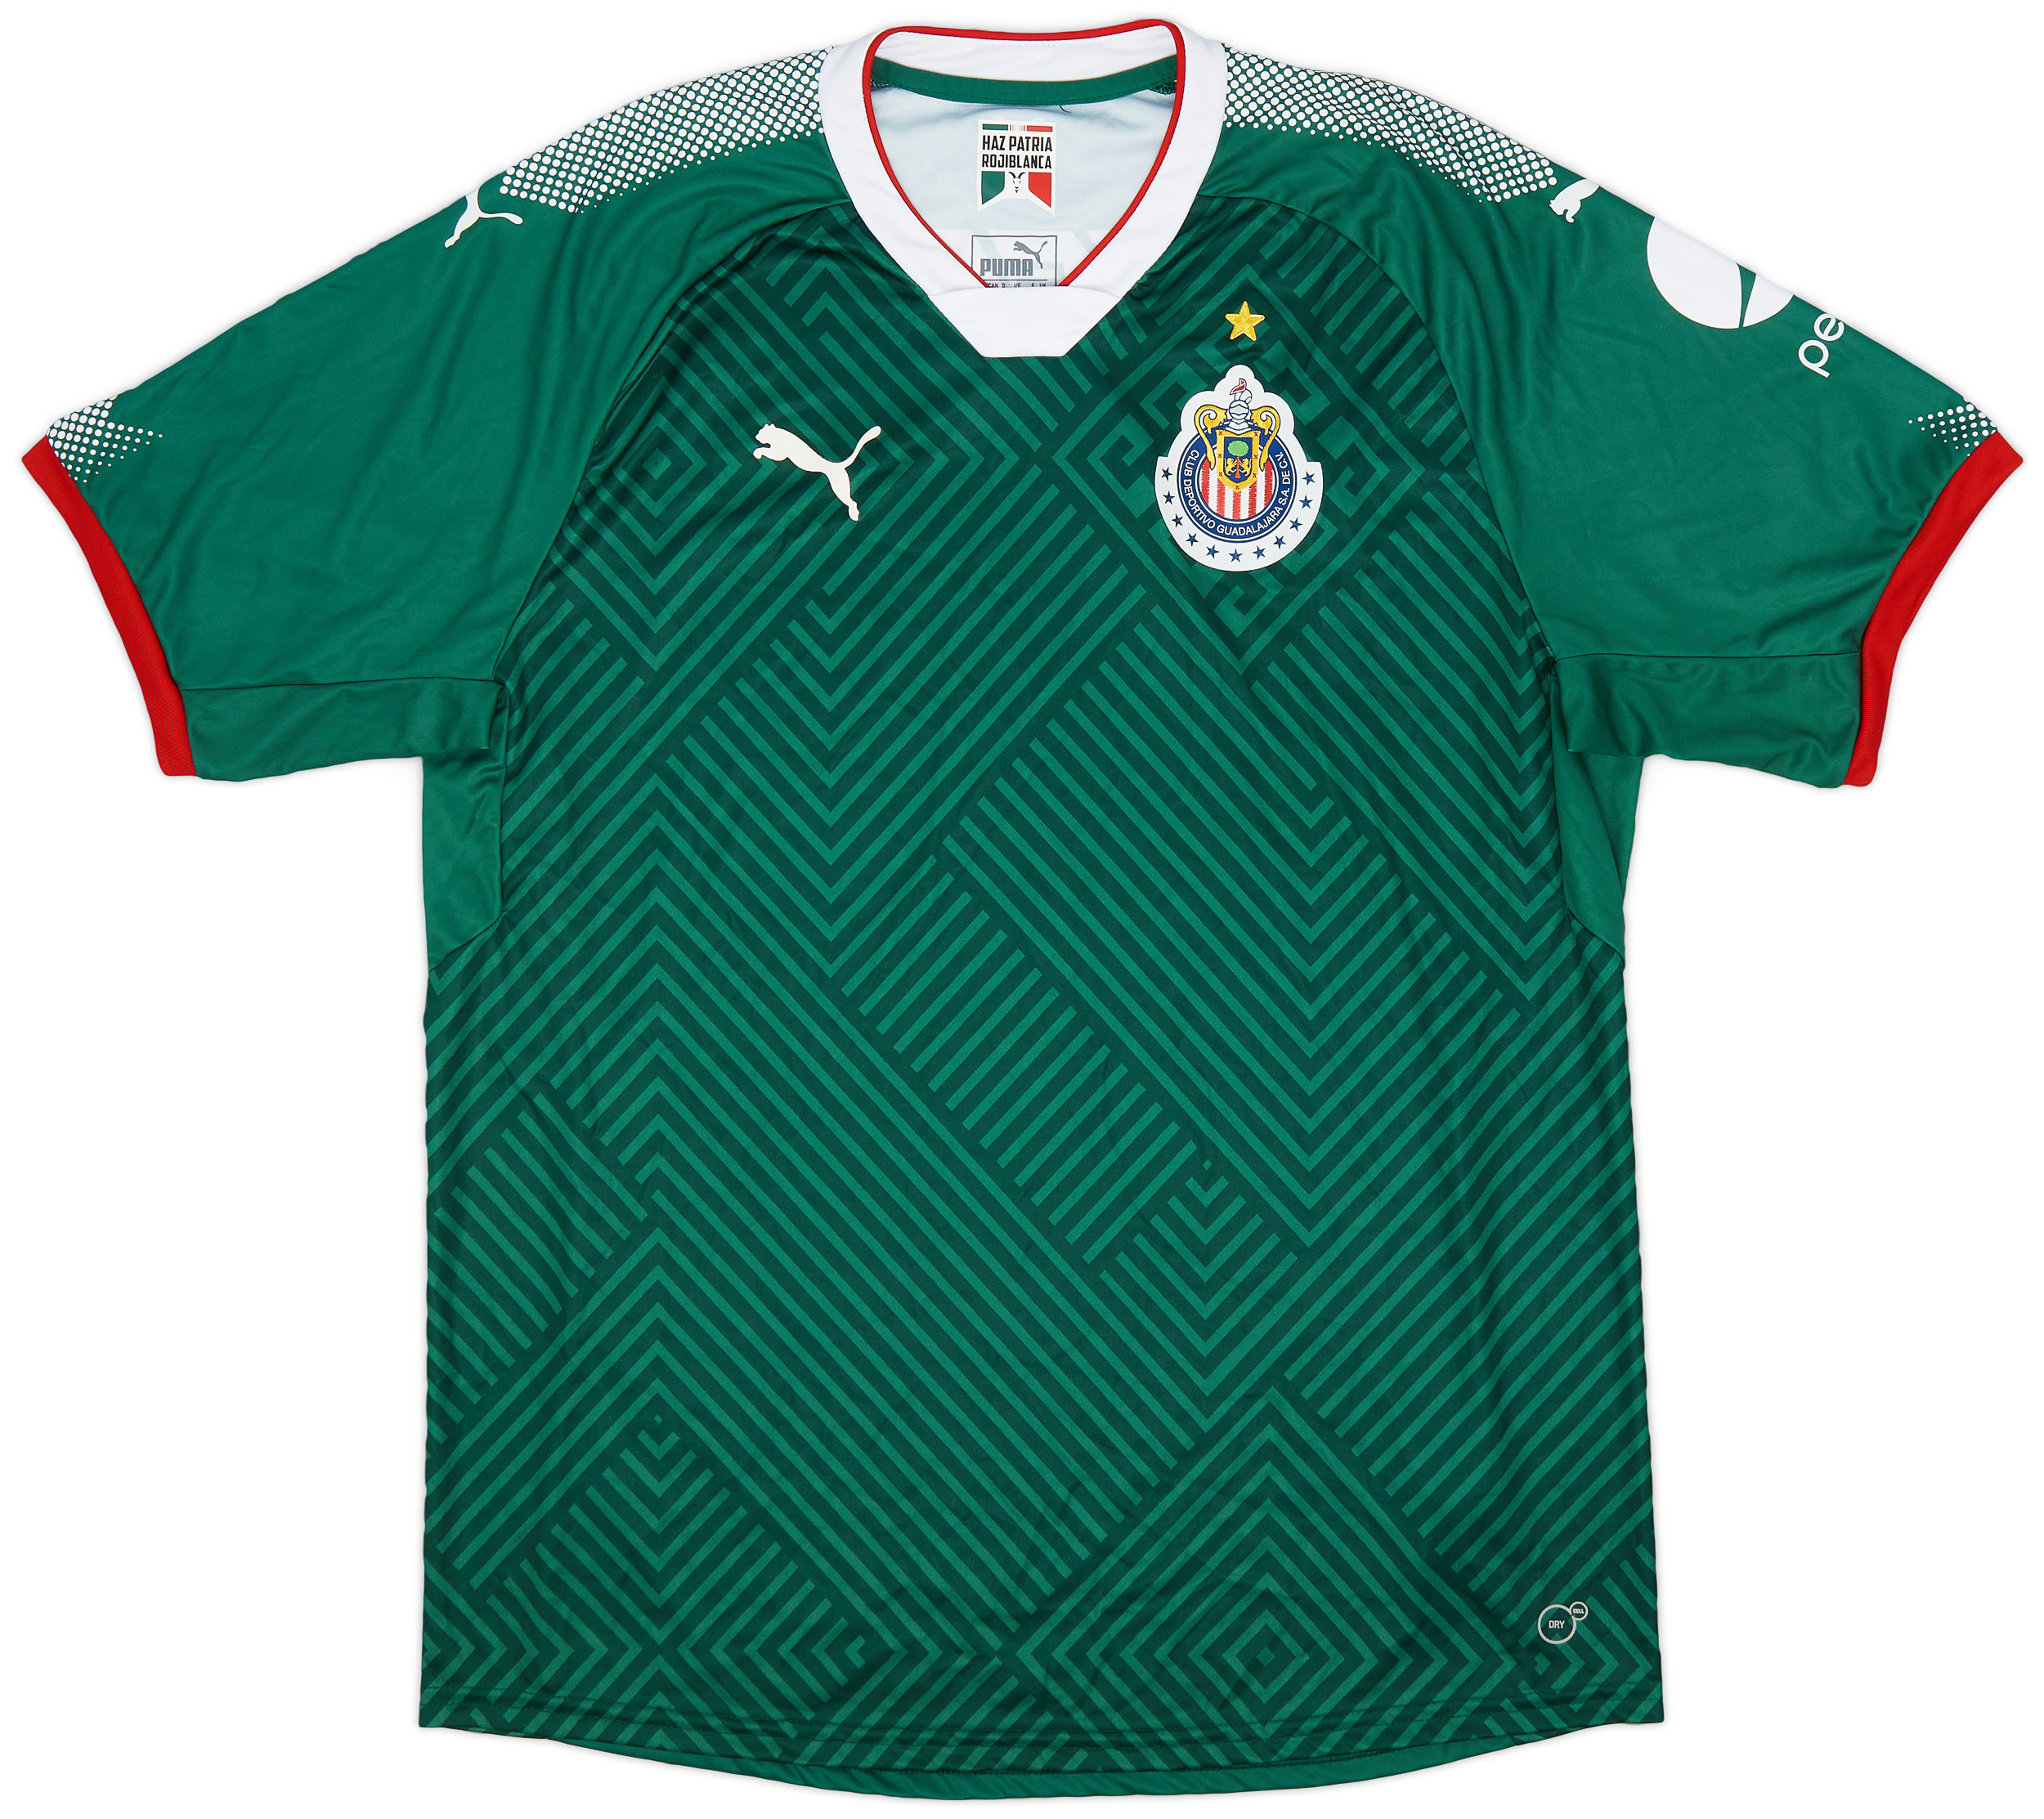 Chivas de Guadalajara  Third shirt (Original)